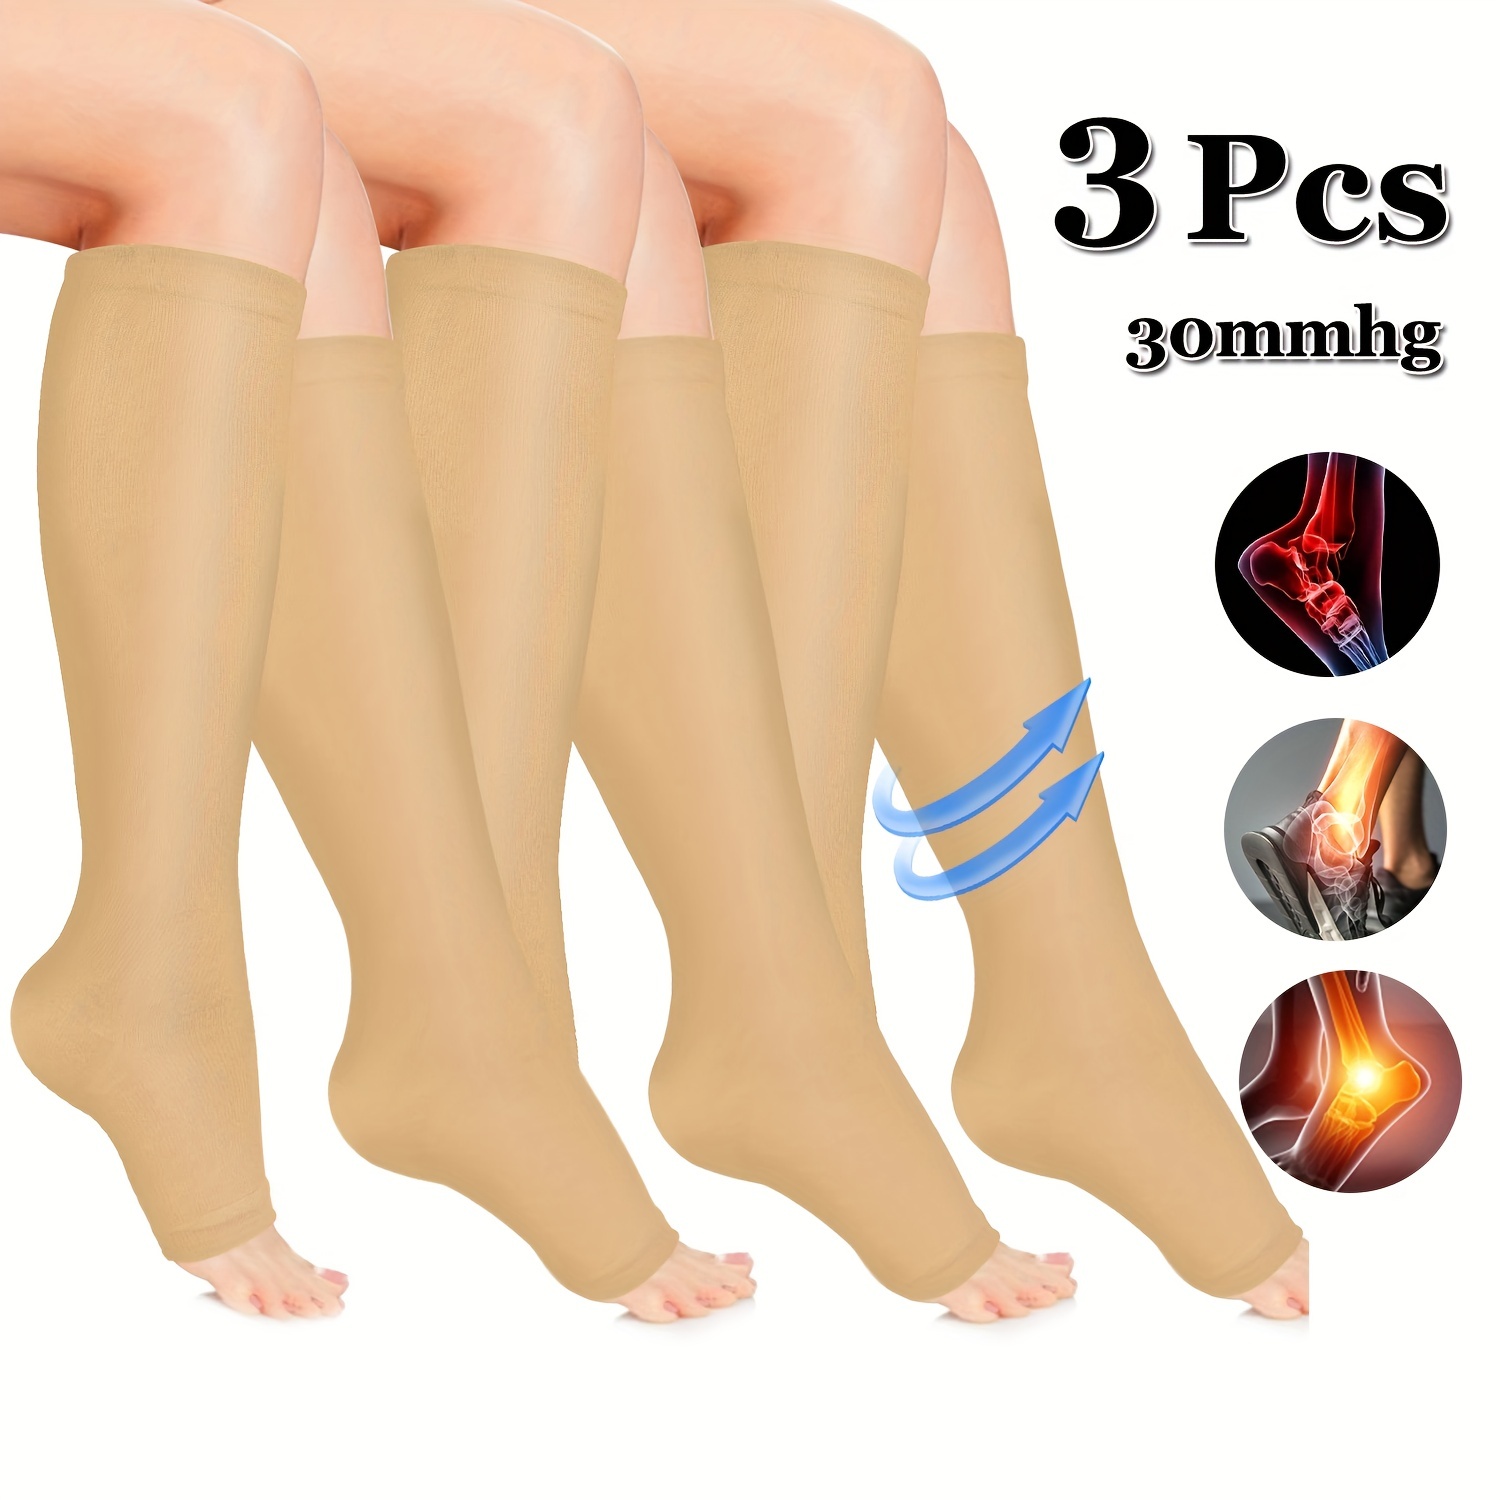 Open Toe Compression Socks Women Knee High Toeless 15-25 mmHg